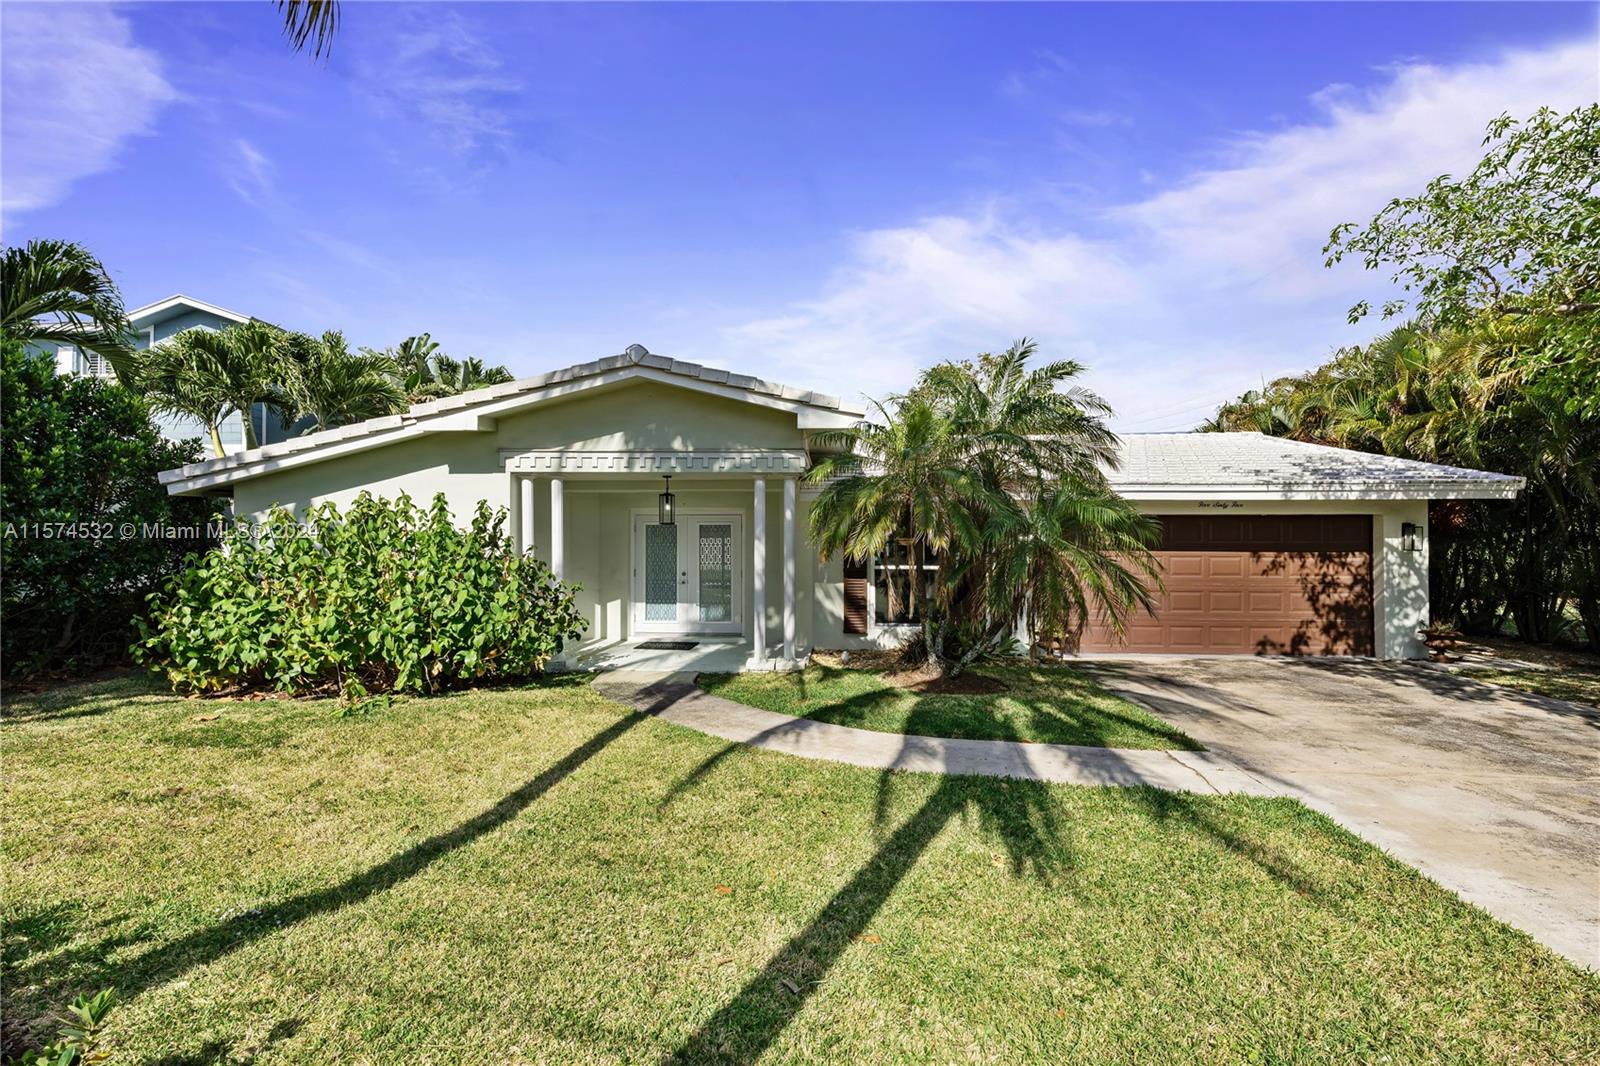 Rental Property at 565 Ne Olive Way, Boca Raton, Palm Beach County, Florida - Bedrooms: 3 
Bathrooms: 2  - $6,500 MO.